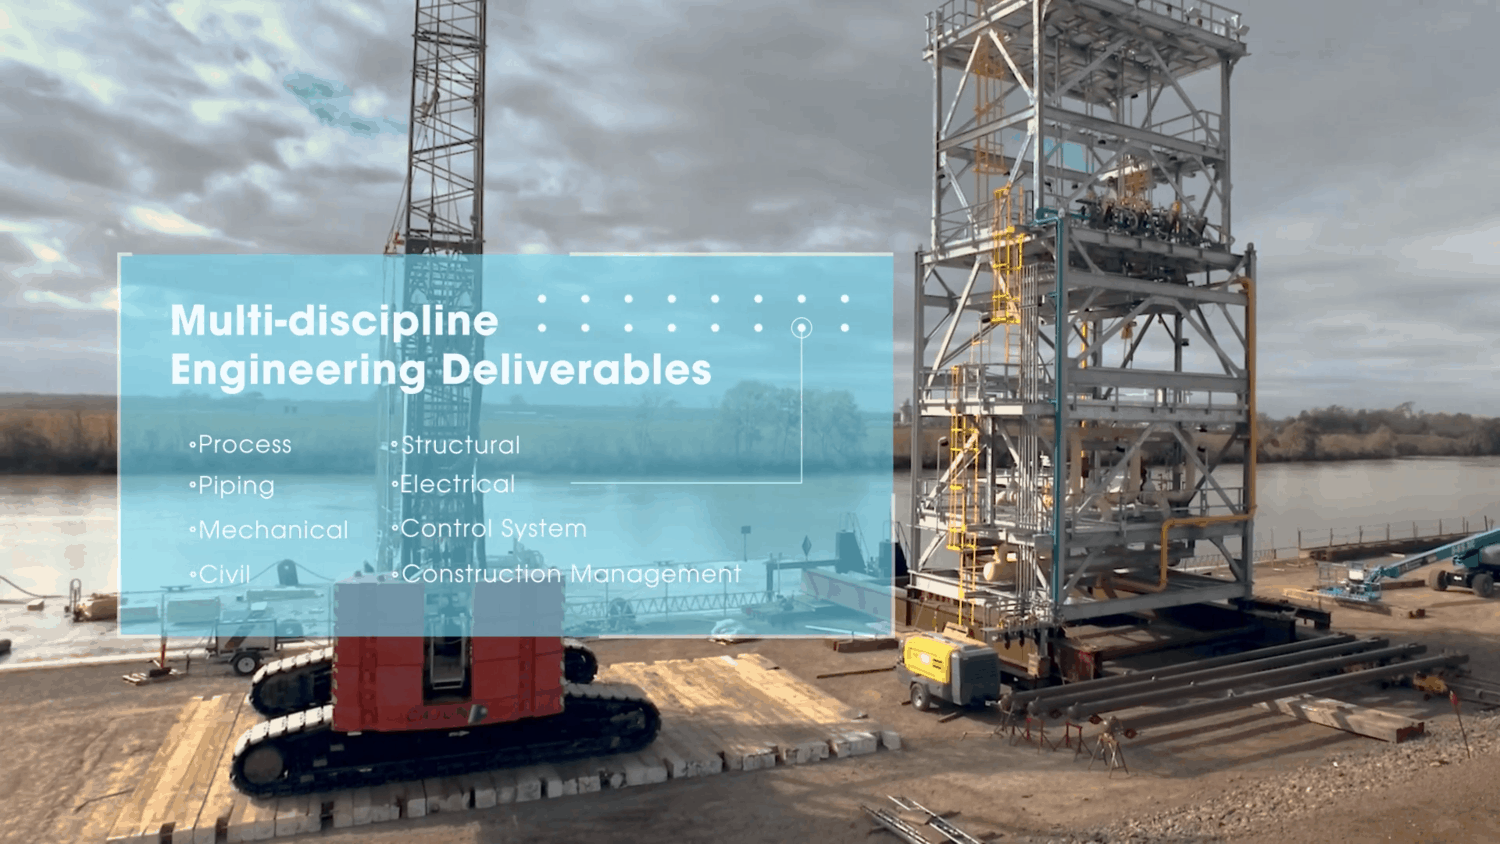 Multi-discipline engineering deliverables on site